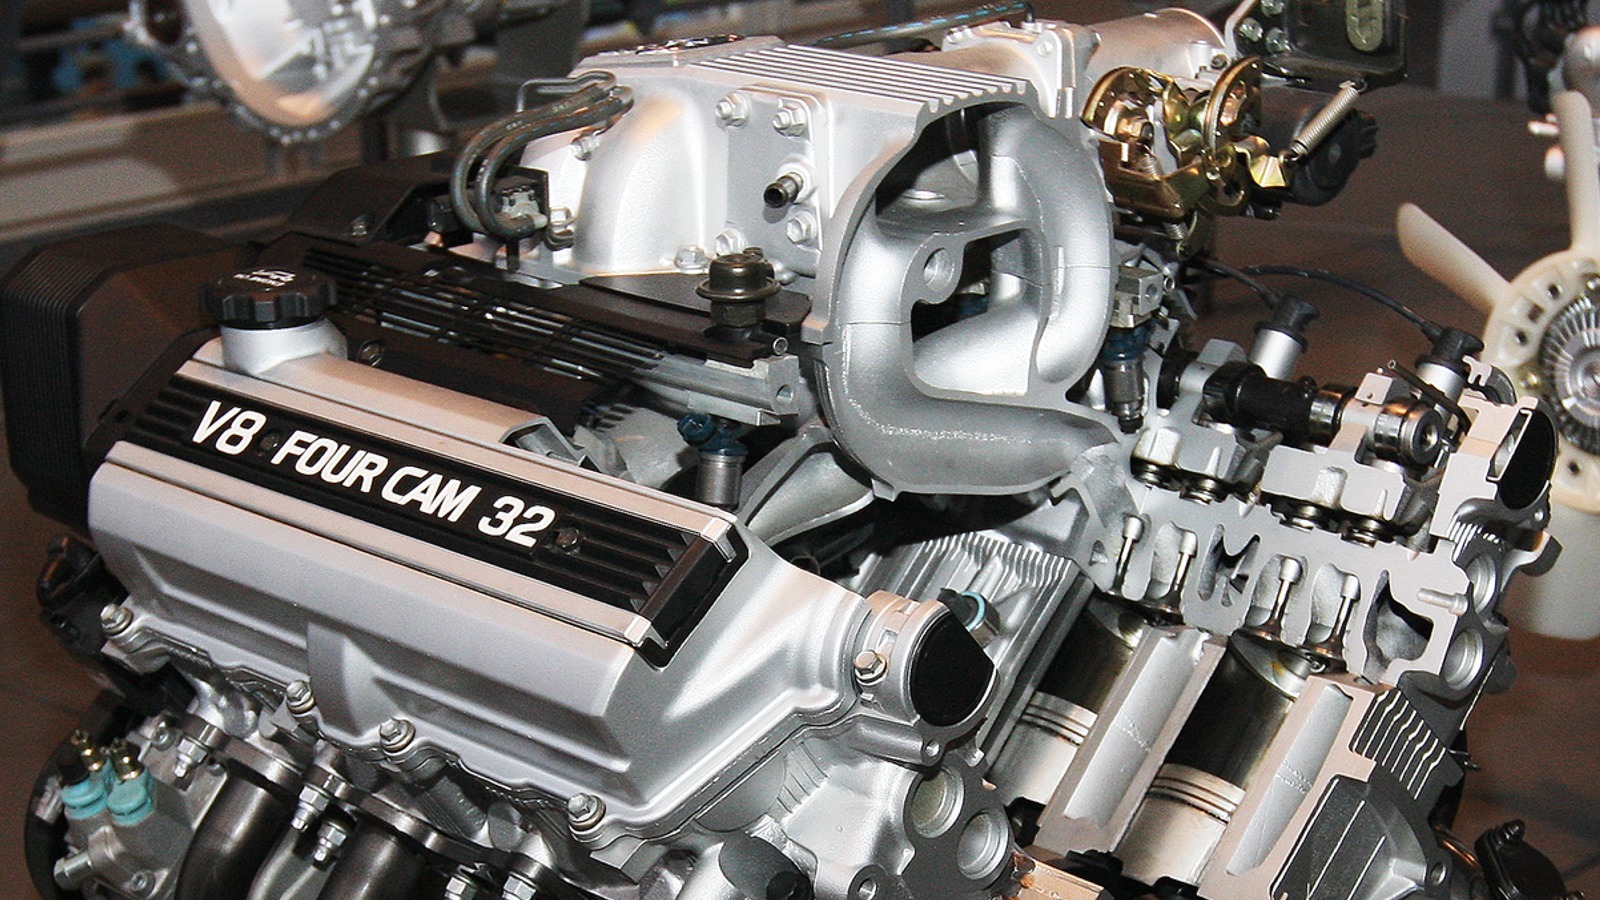 Every Toyota Model Powered By The 1UZFE V8 Engine